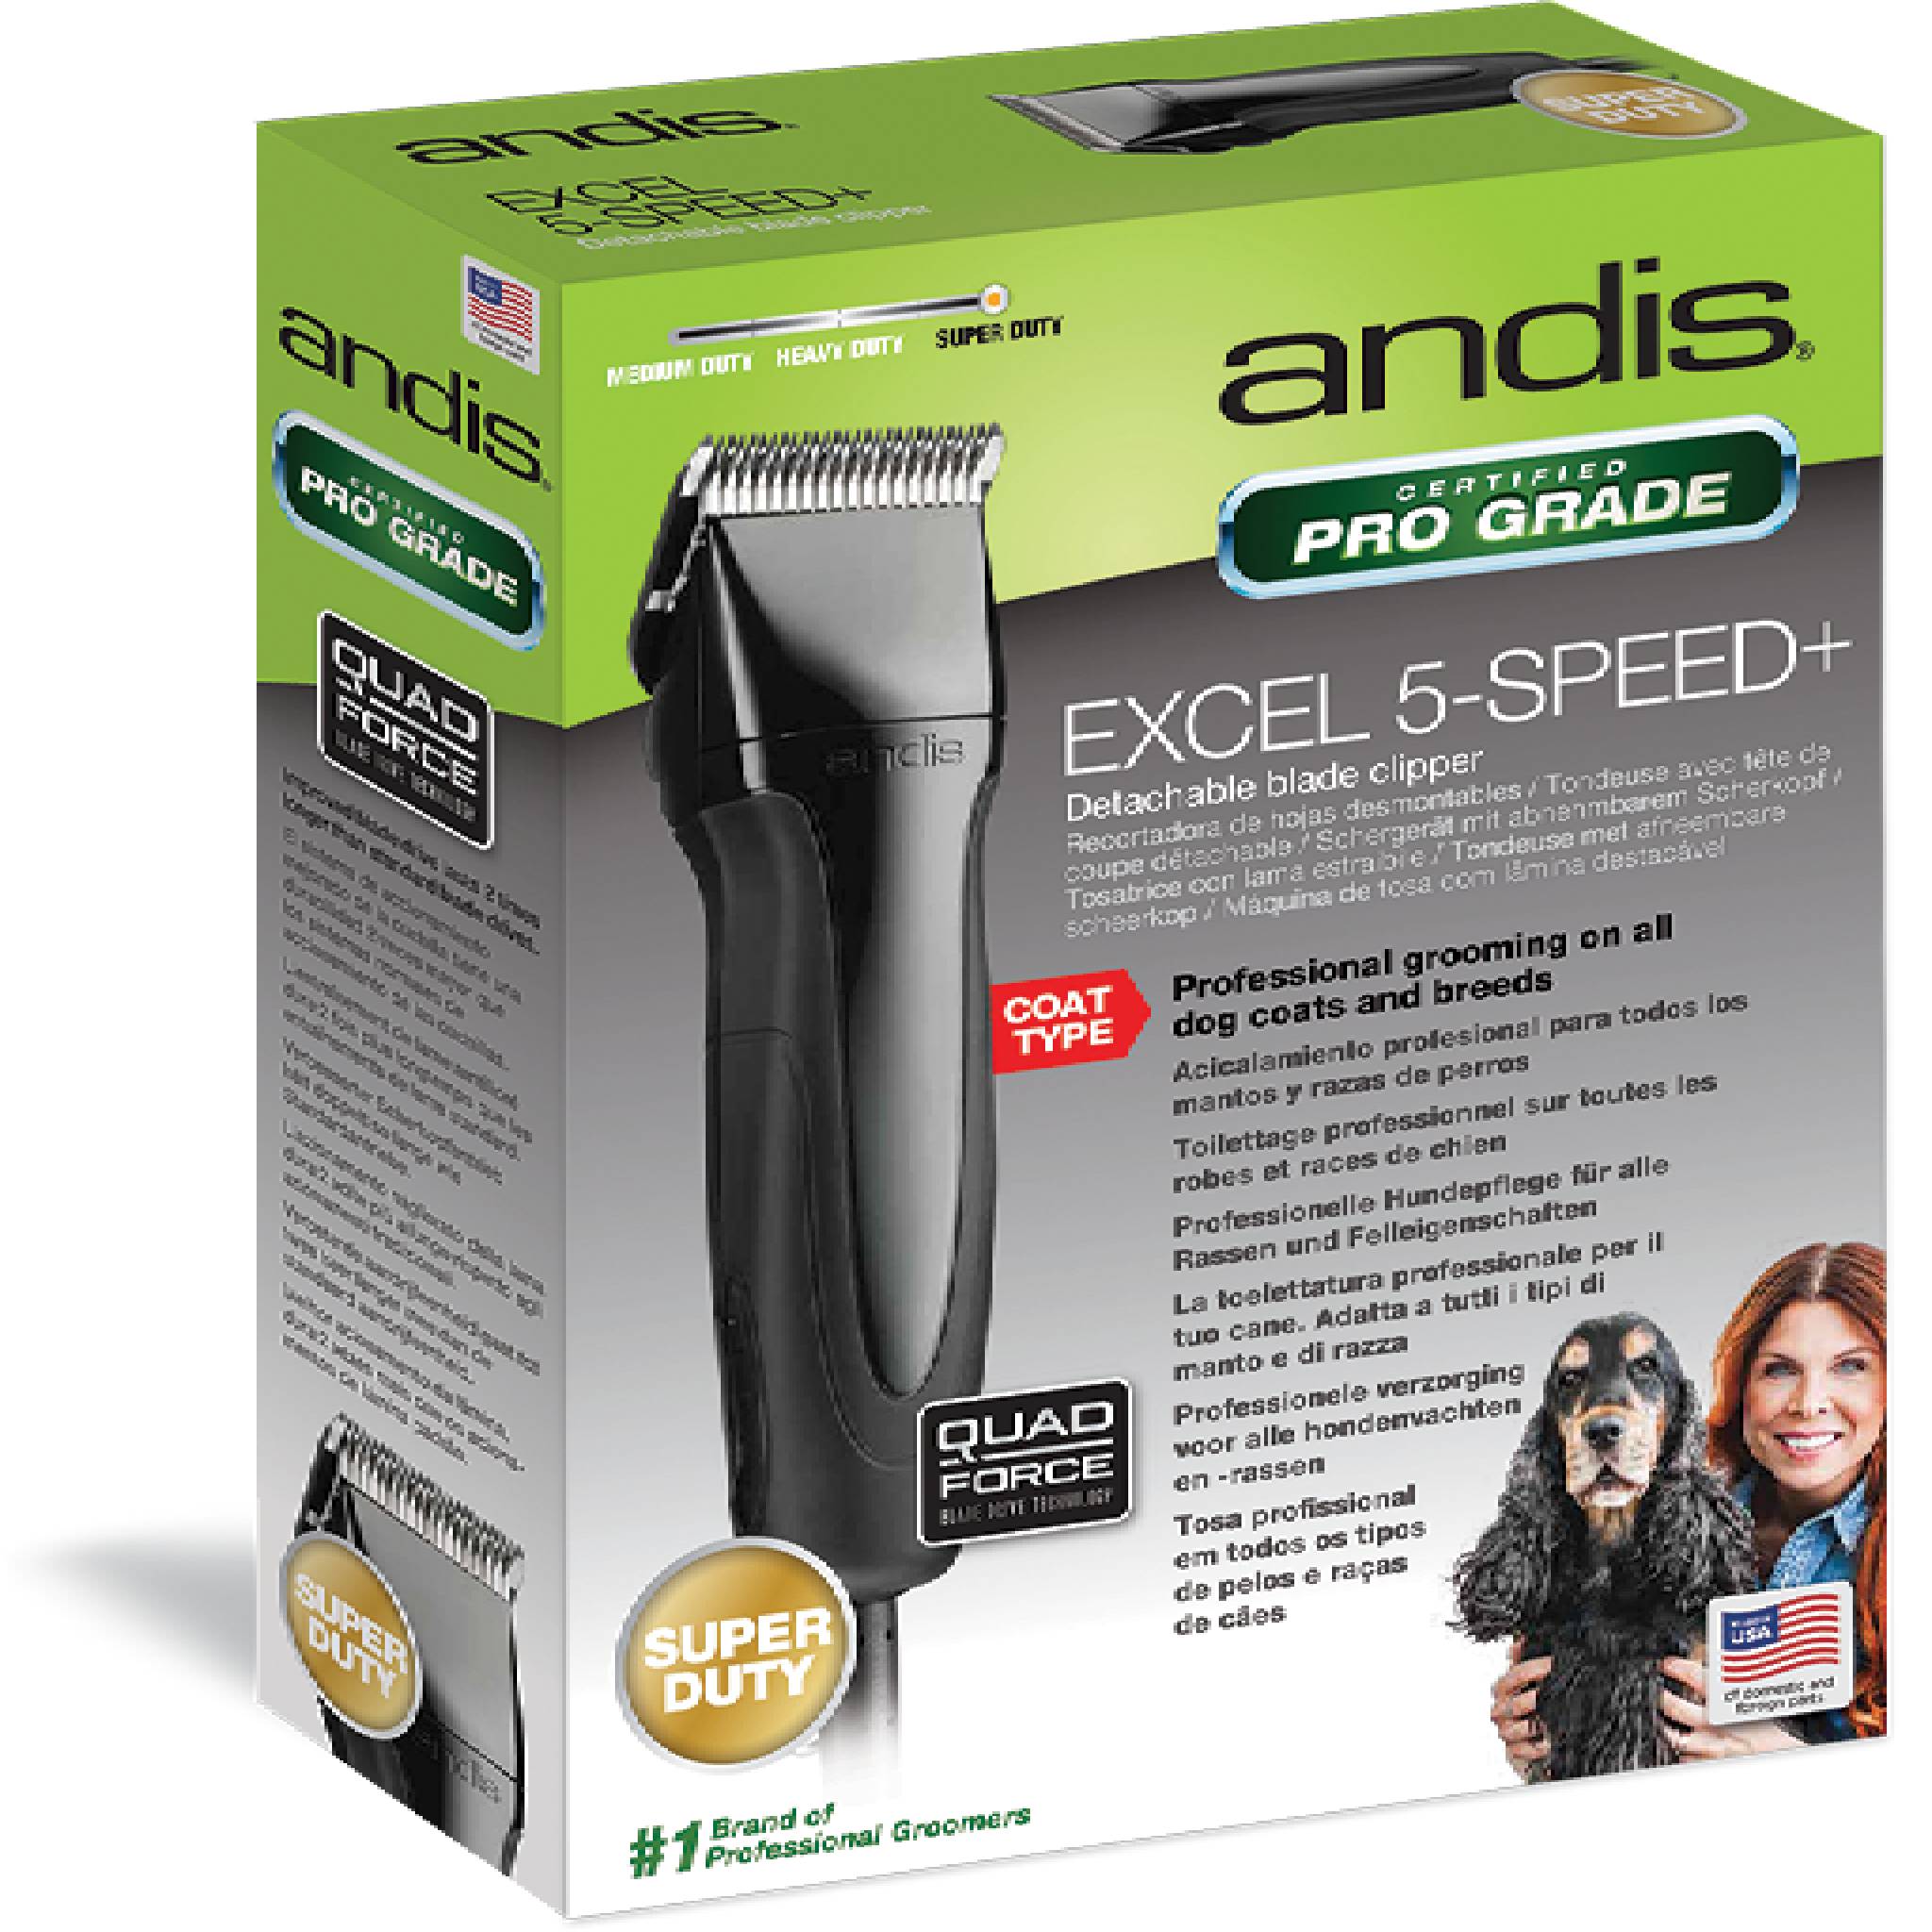 Andis  Excel 5-Speed Plus Detachable Blade Clipper - Burgundy - Black